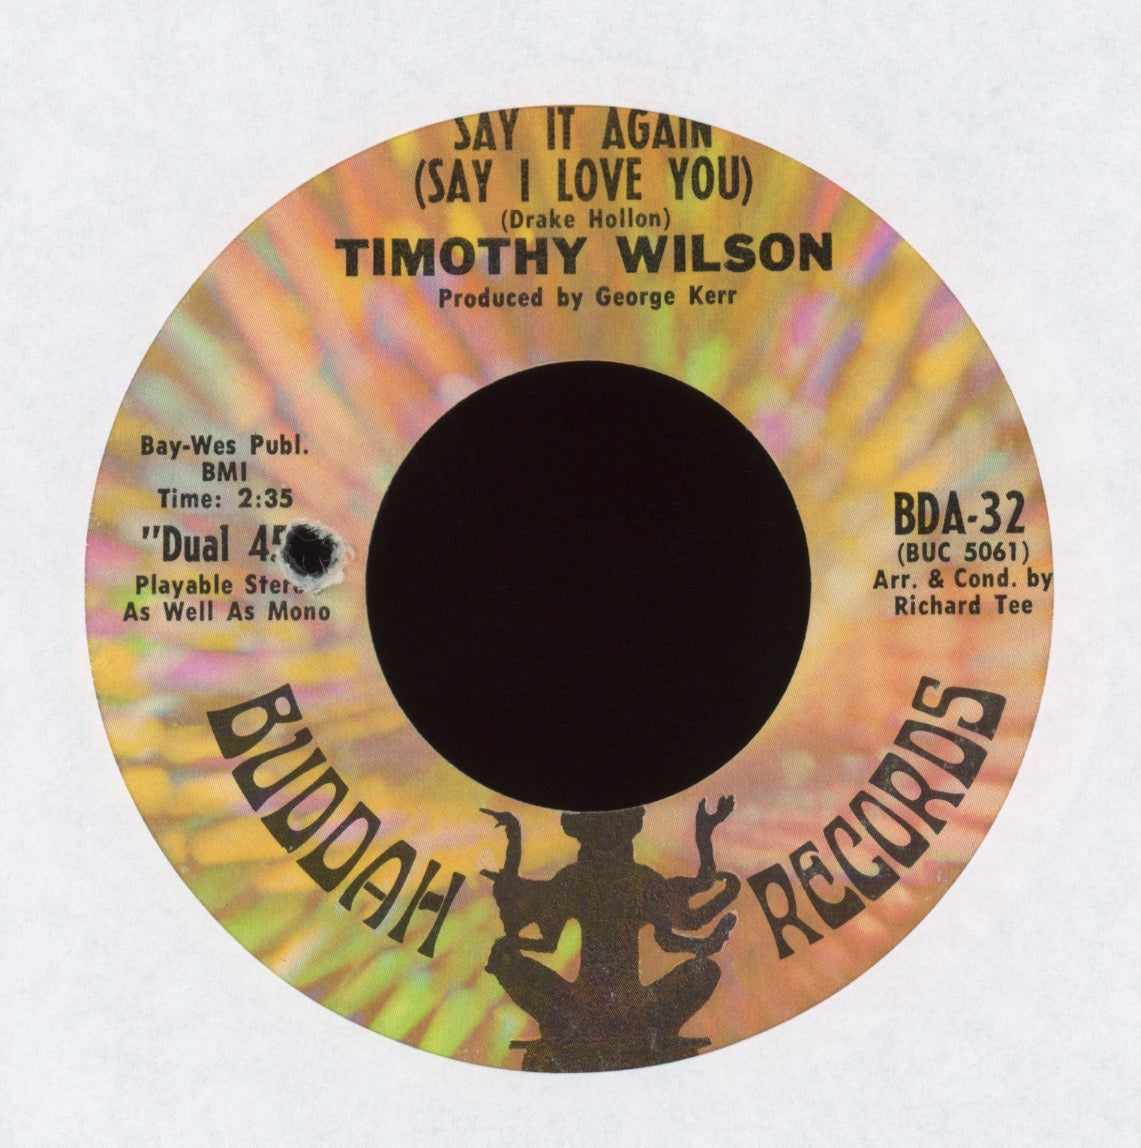 Timothy Wilson - Say It Again (Say I Love You) on Buddah